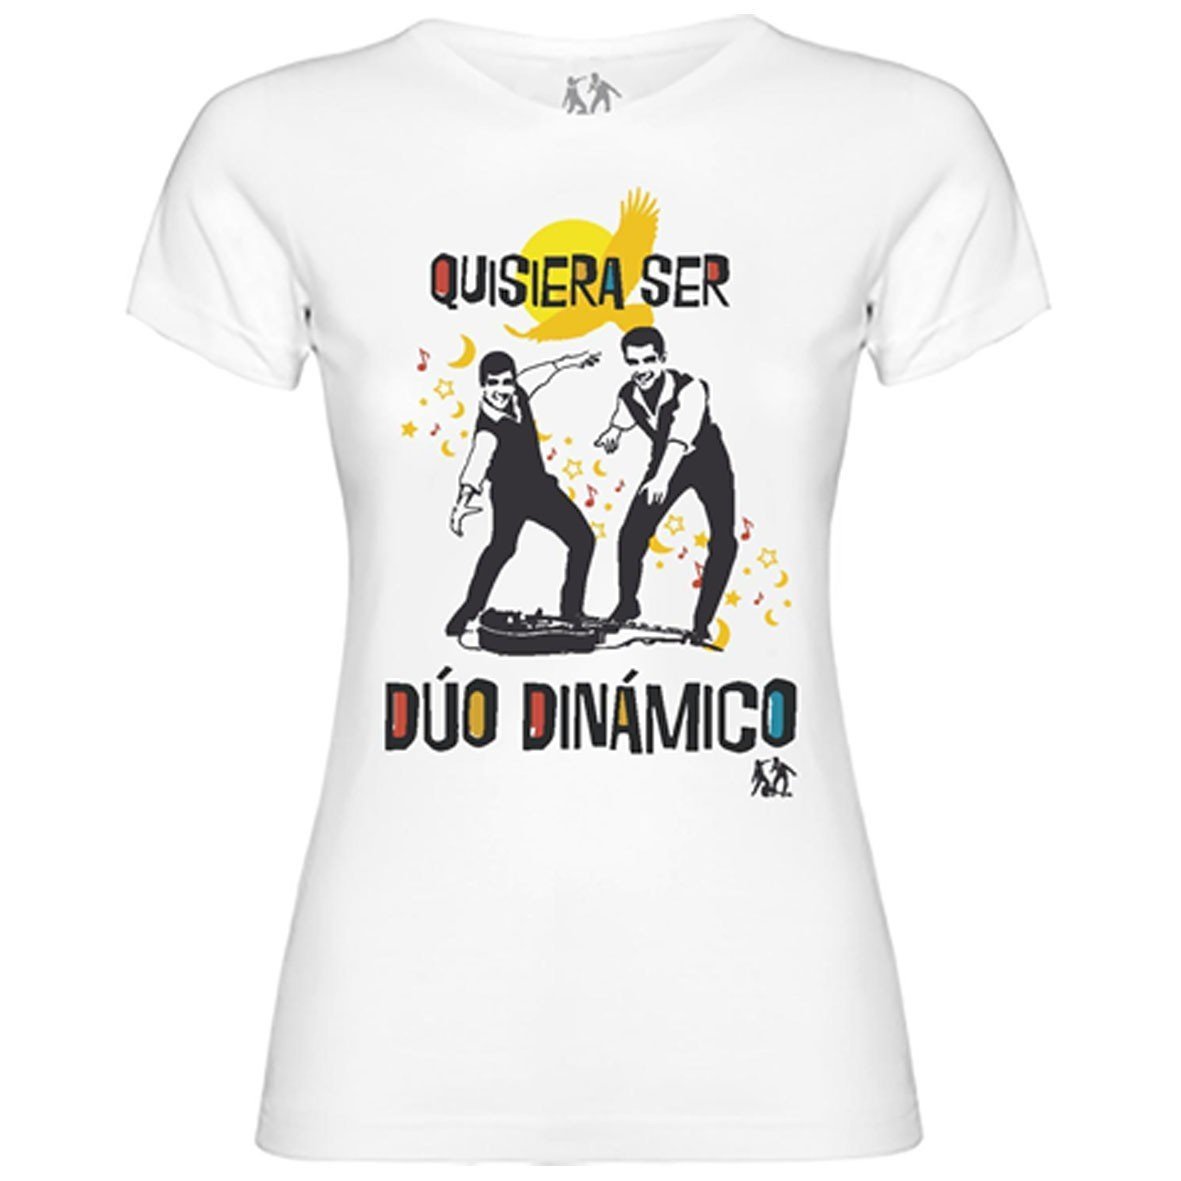 El Dúo Dinámico - Camiseta Chica "Quisiera ser" - D2fy · Rocktud - Duo Dinámico